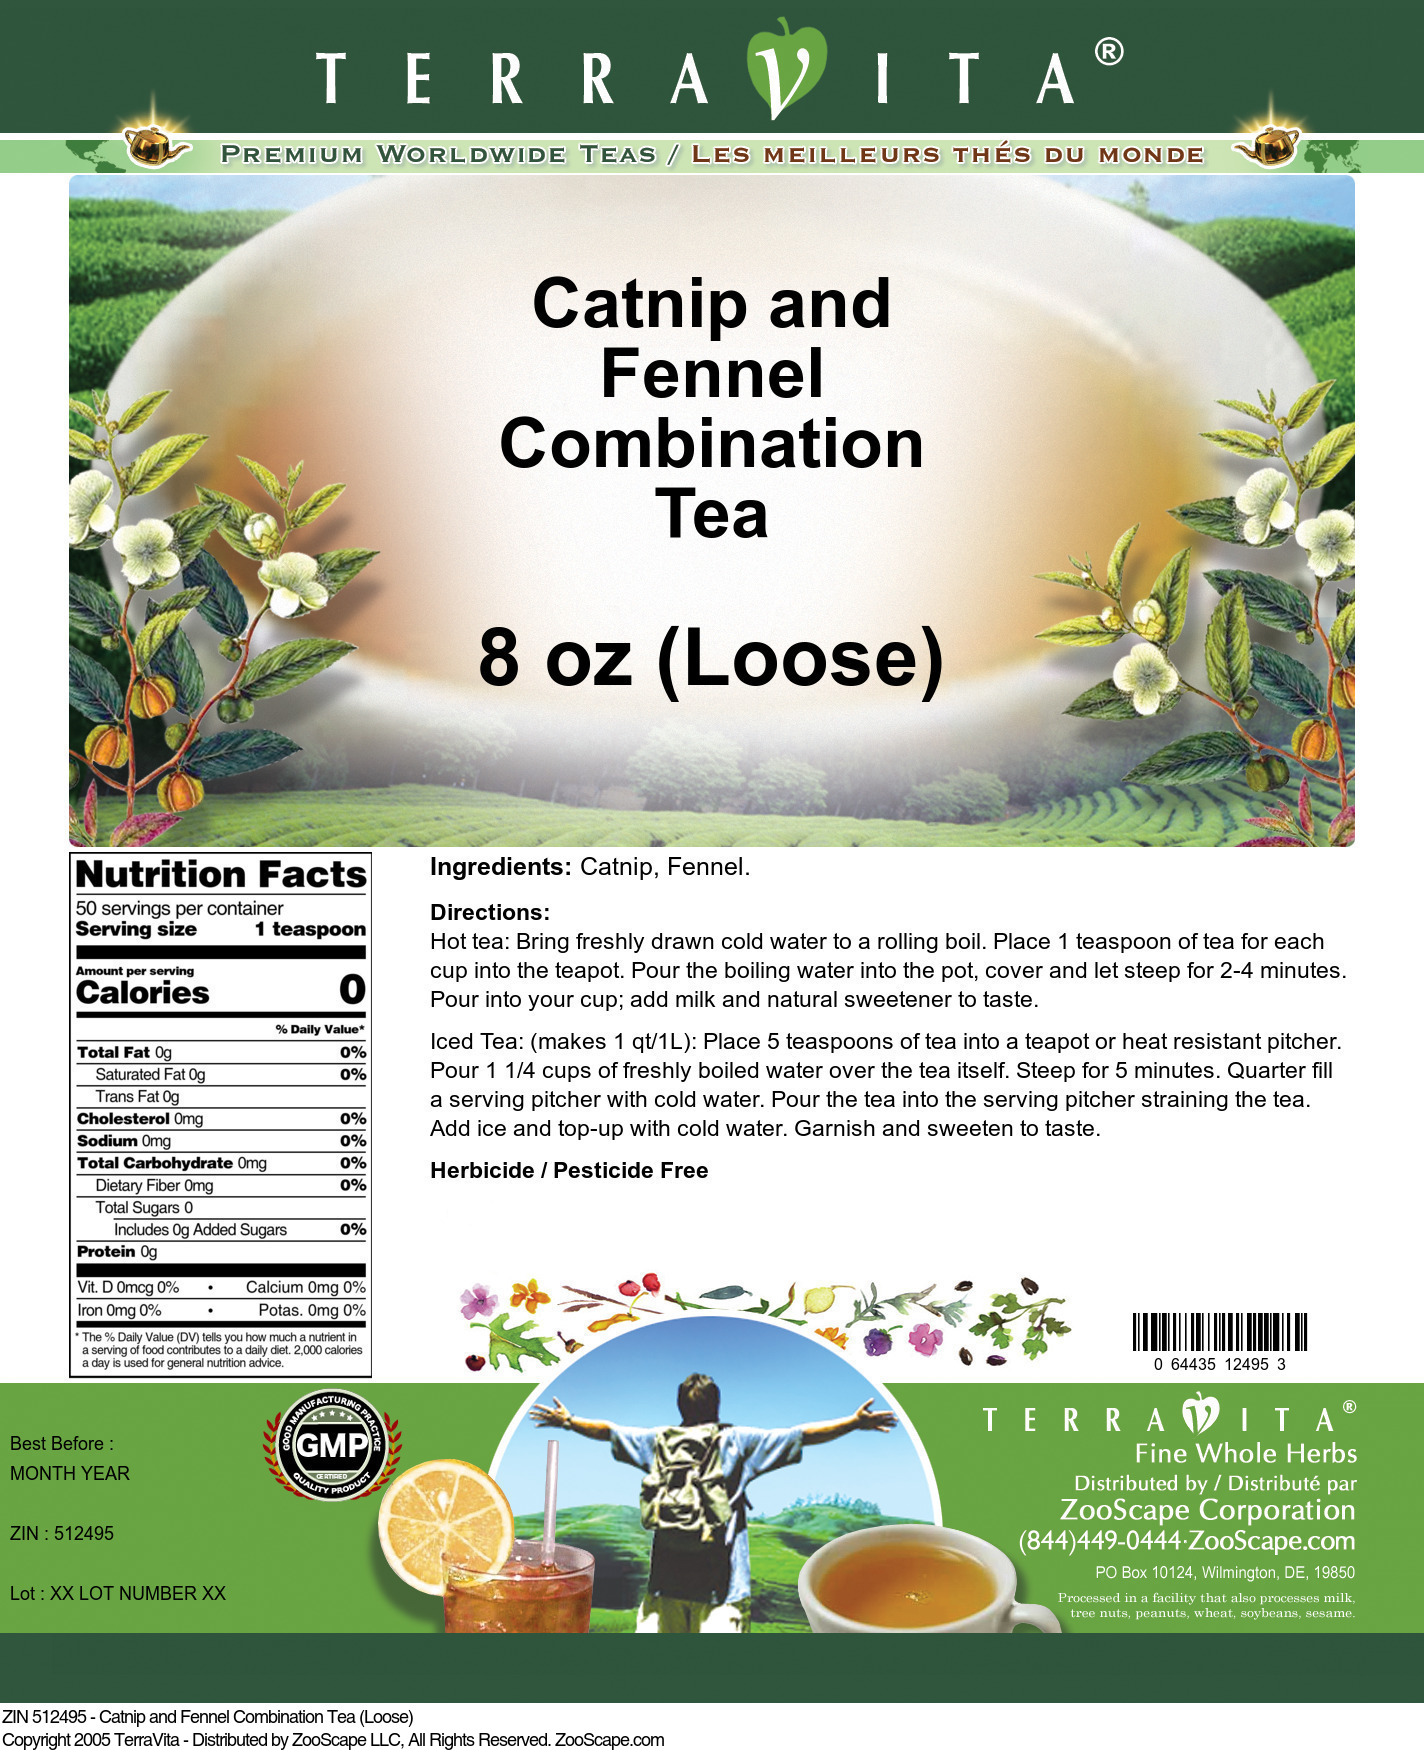 Catnip and Fennel Combination Tea (Loose) - Label